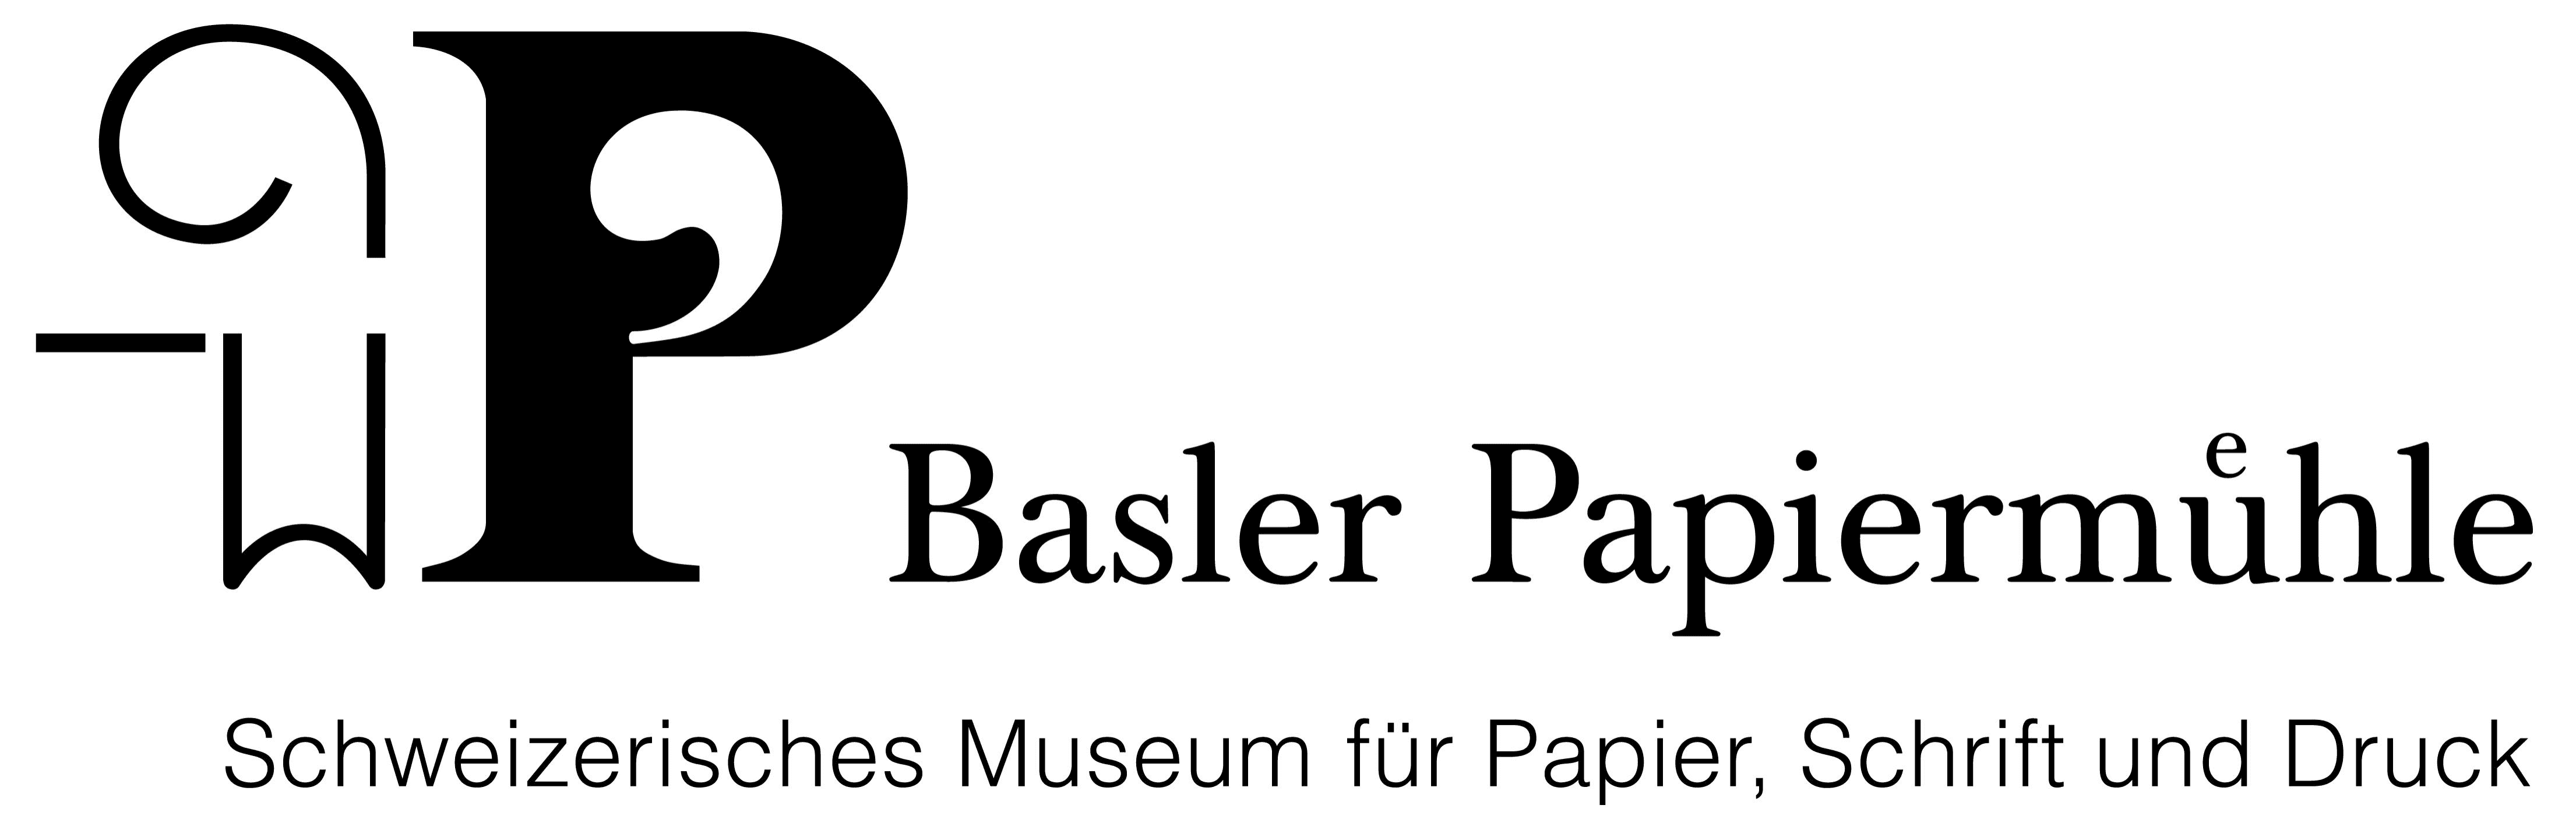 Basaler Papiermühle